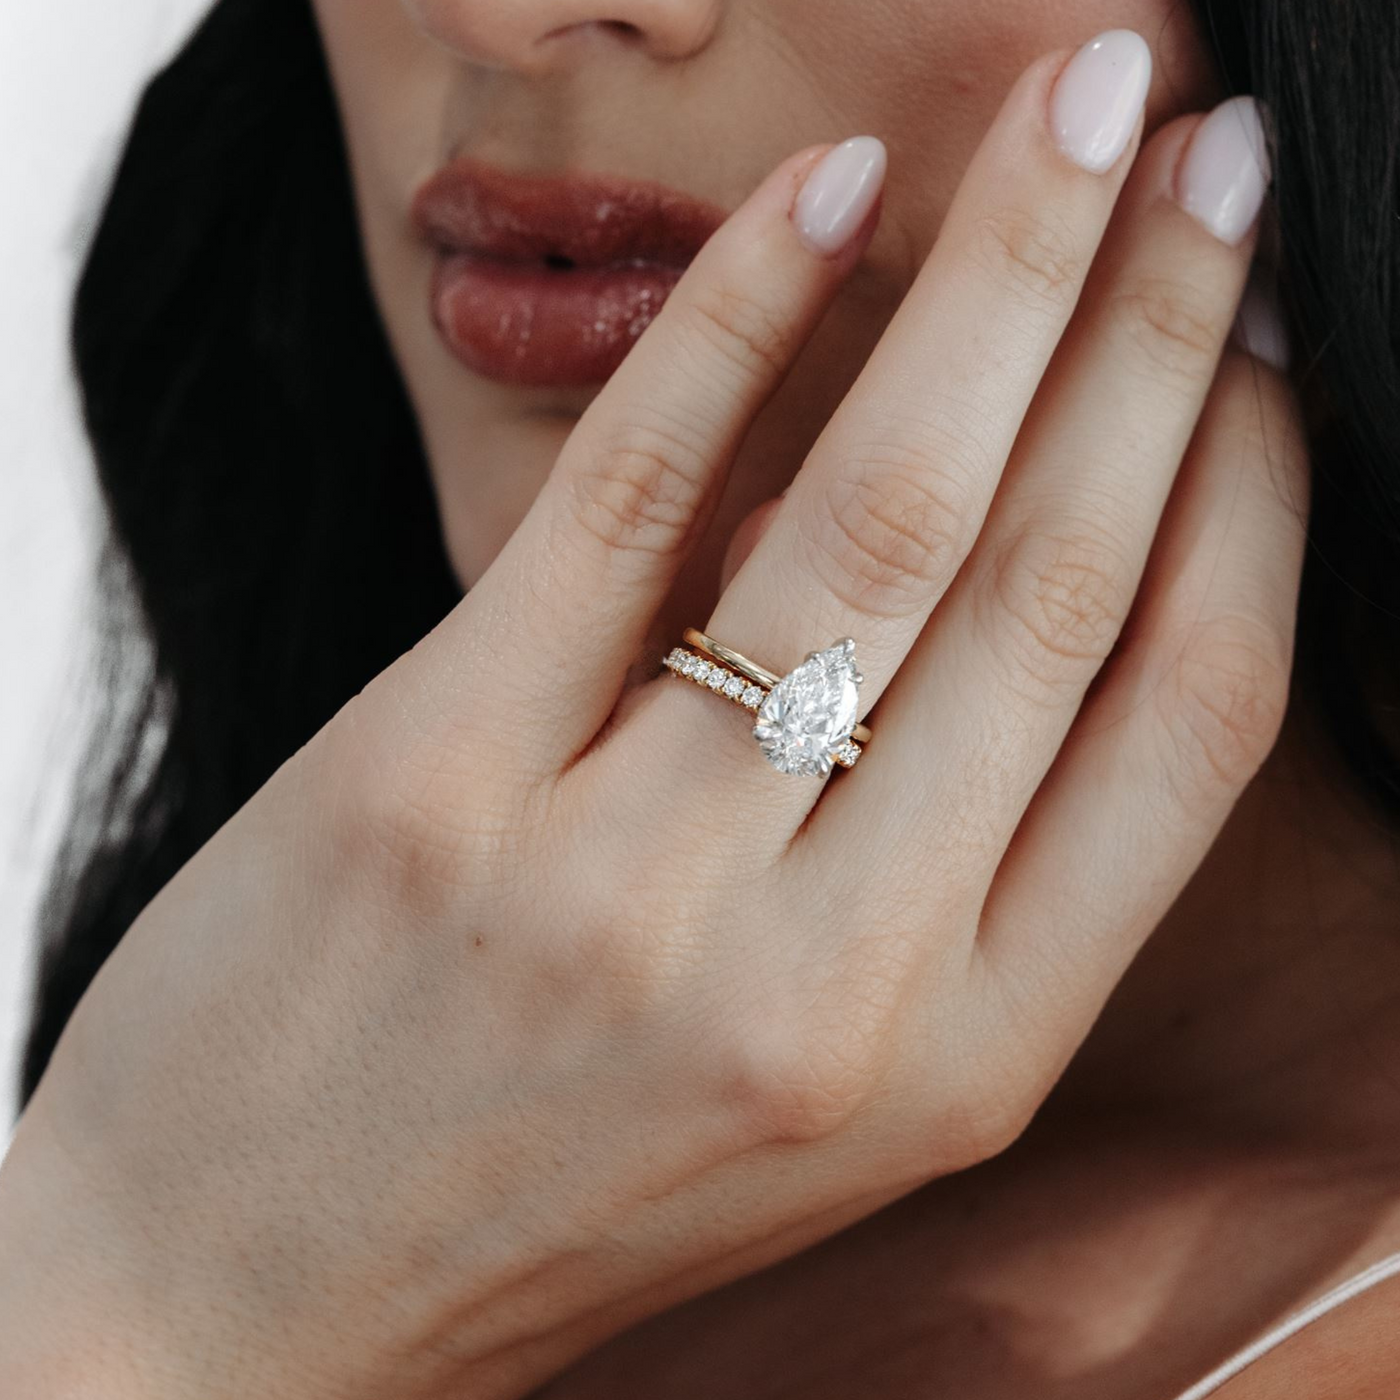 3 carat pear shaped diamond engagement ring